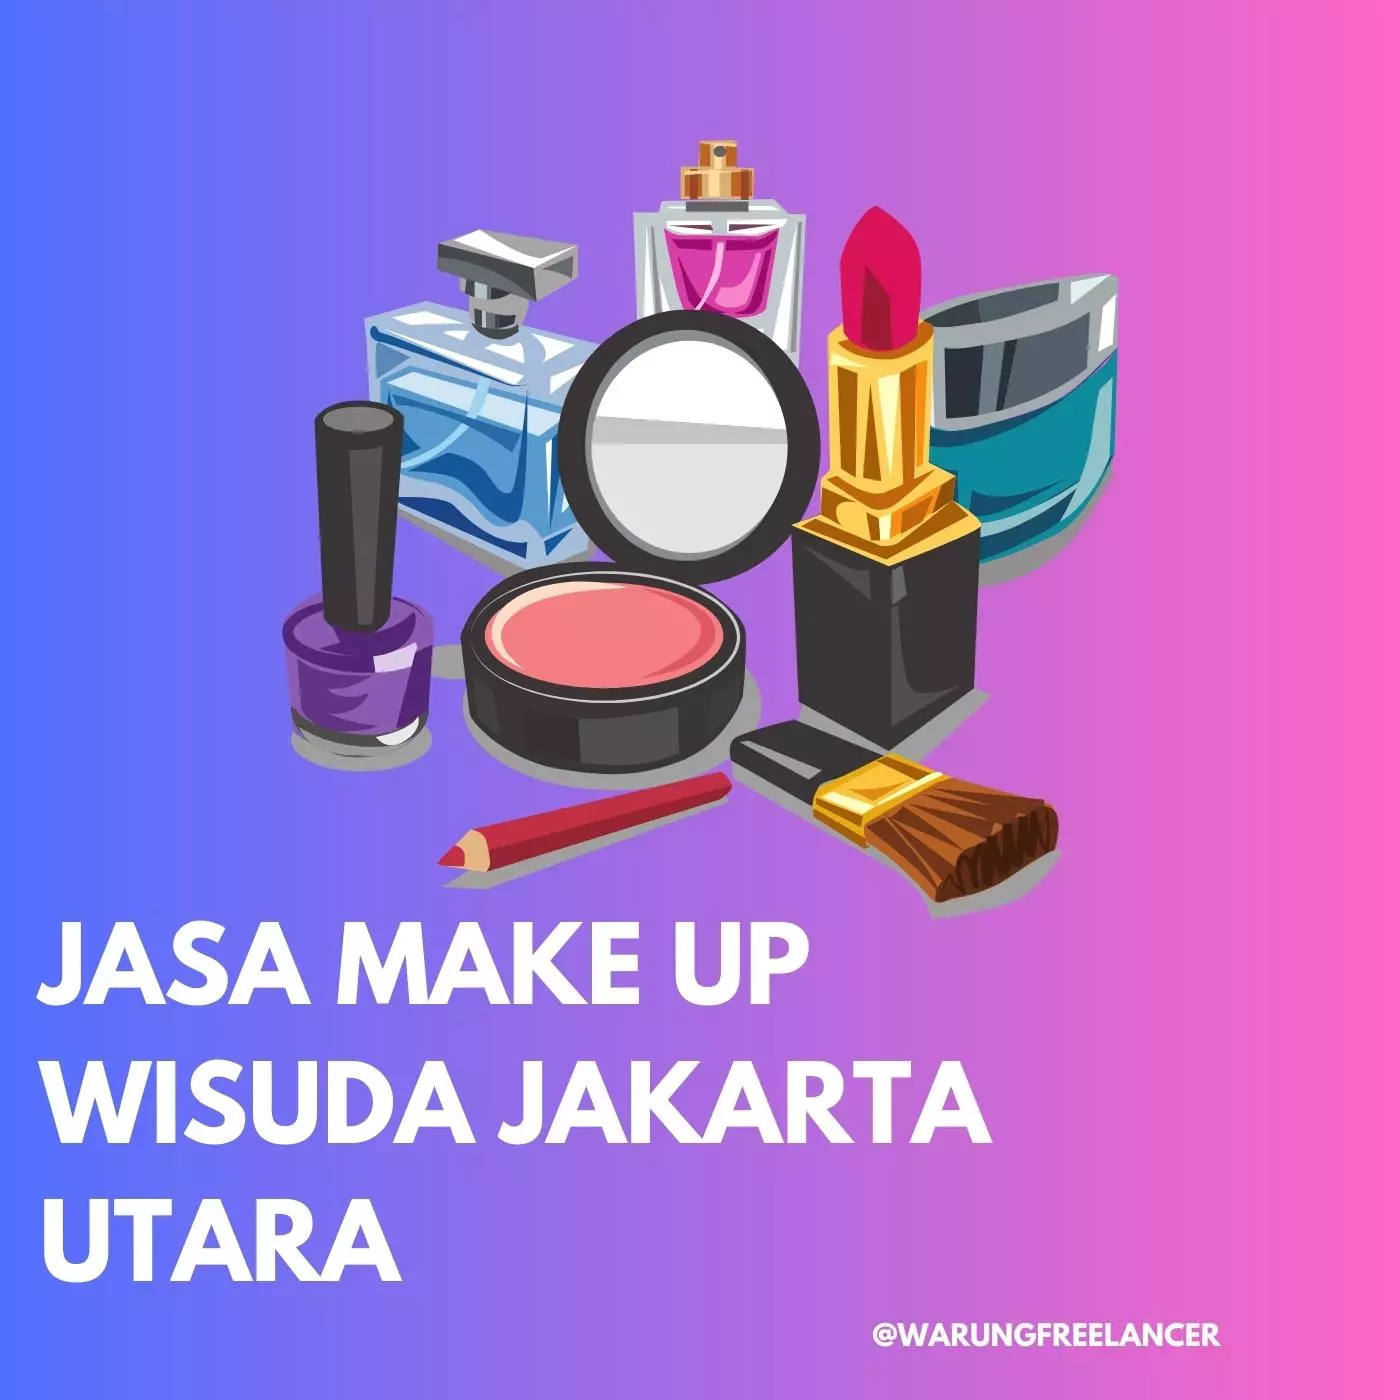 Jasa Make Up Wisuda Jakarta Utara